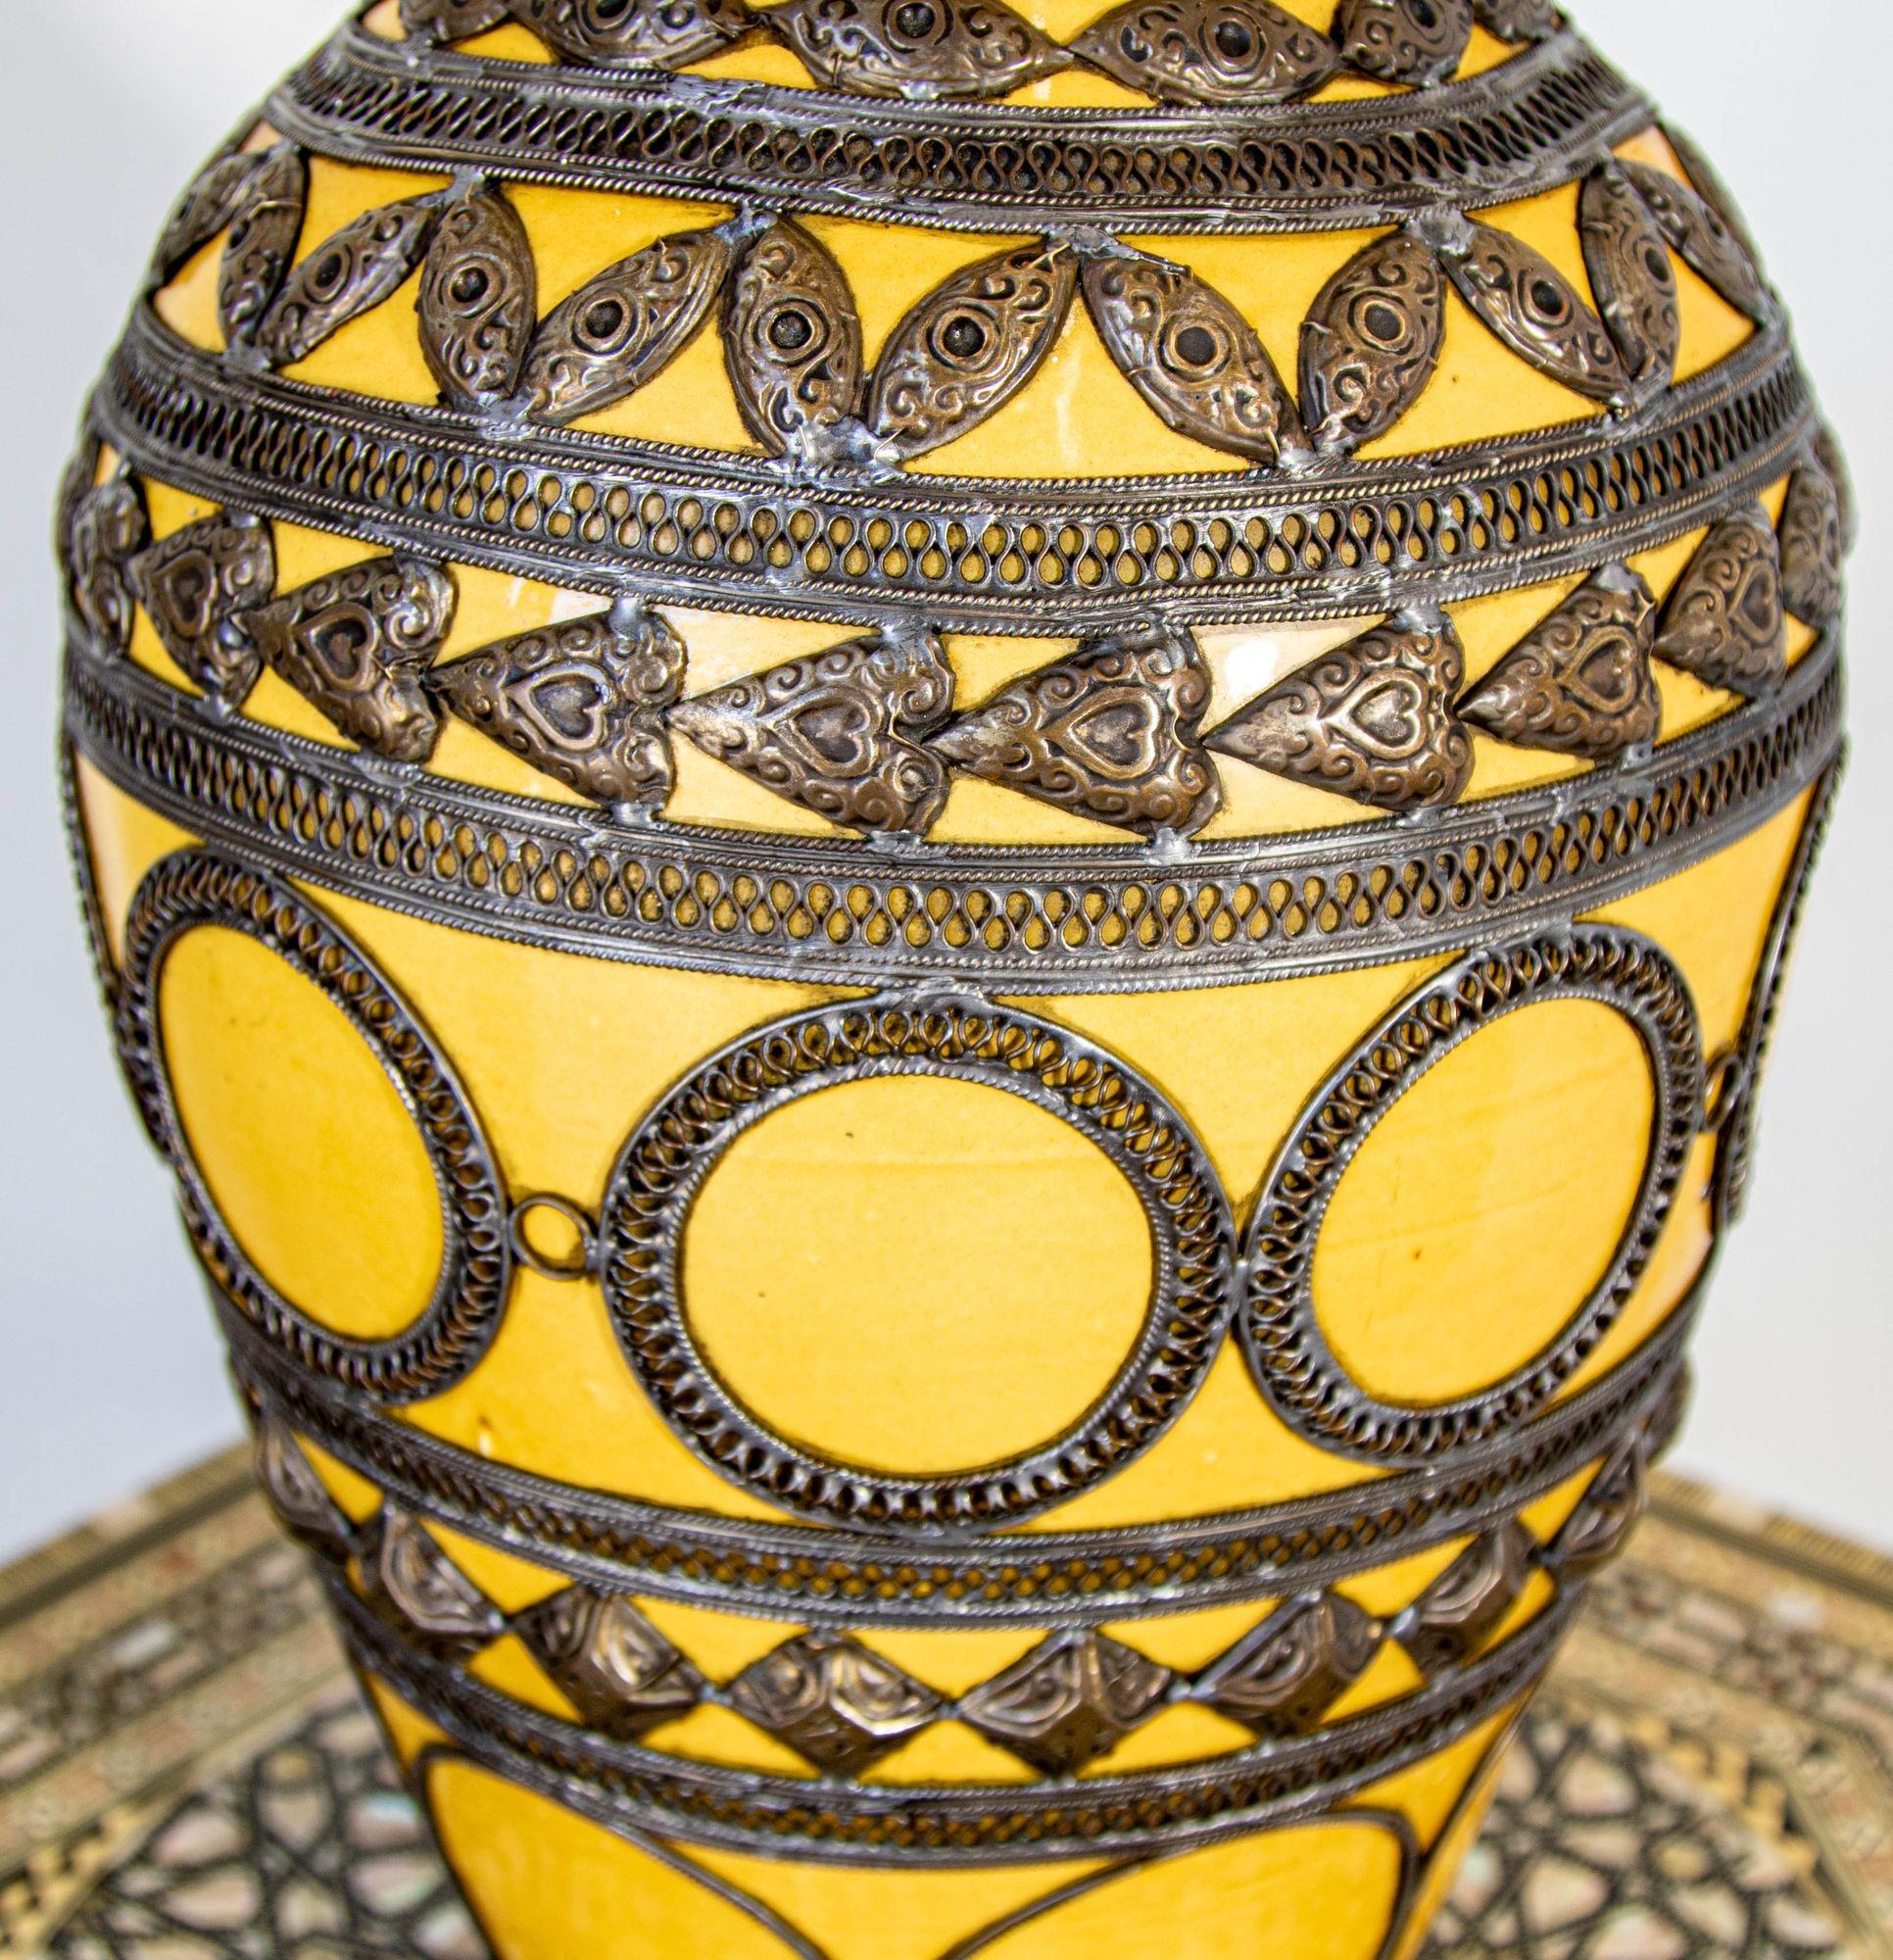 Antique Moroccan Ceramic Vase Bright Yellow with Metal Moorish Filigree overlaid For Sale 1